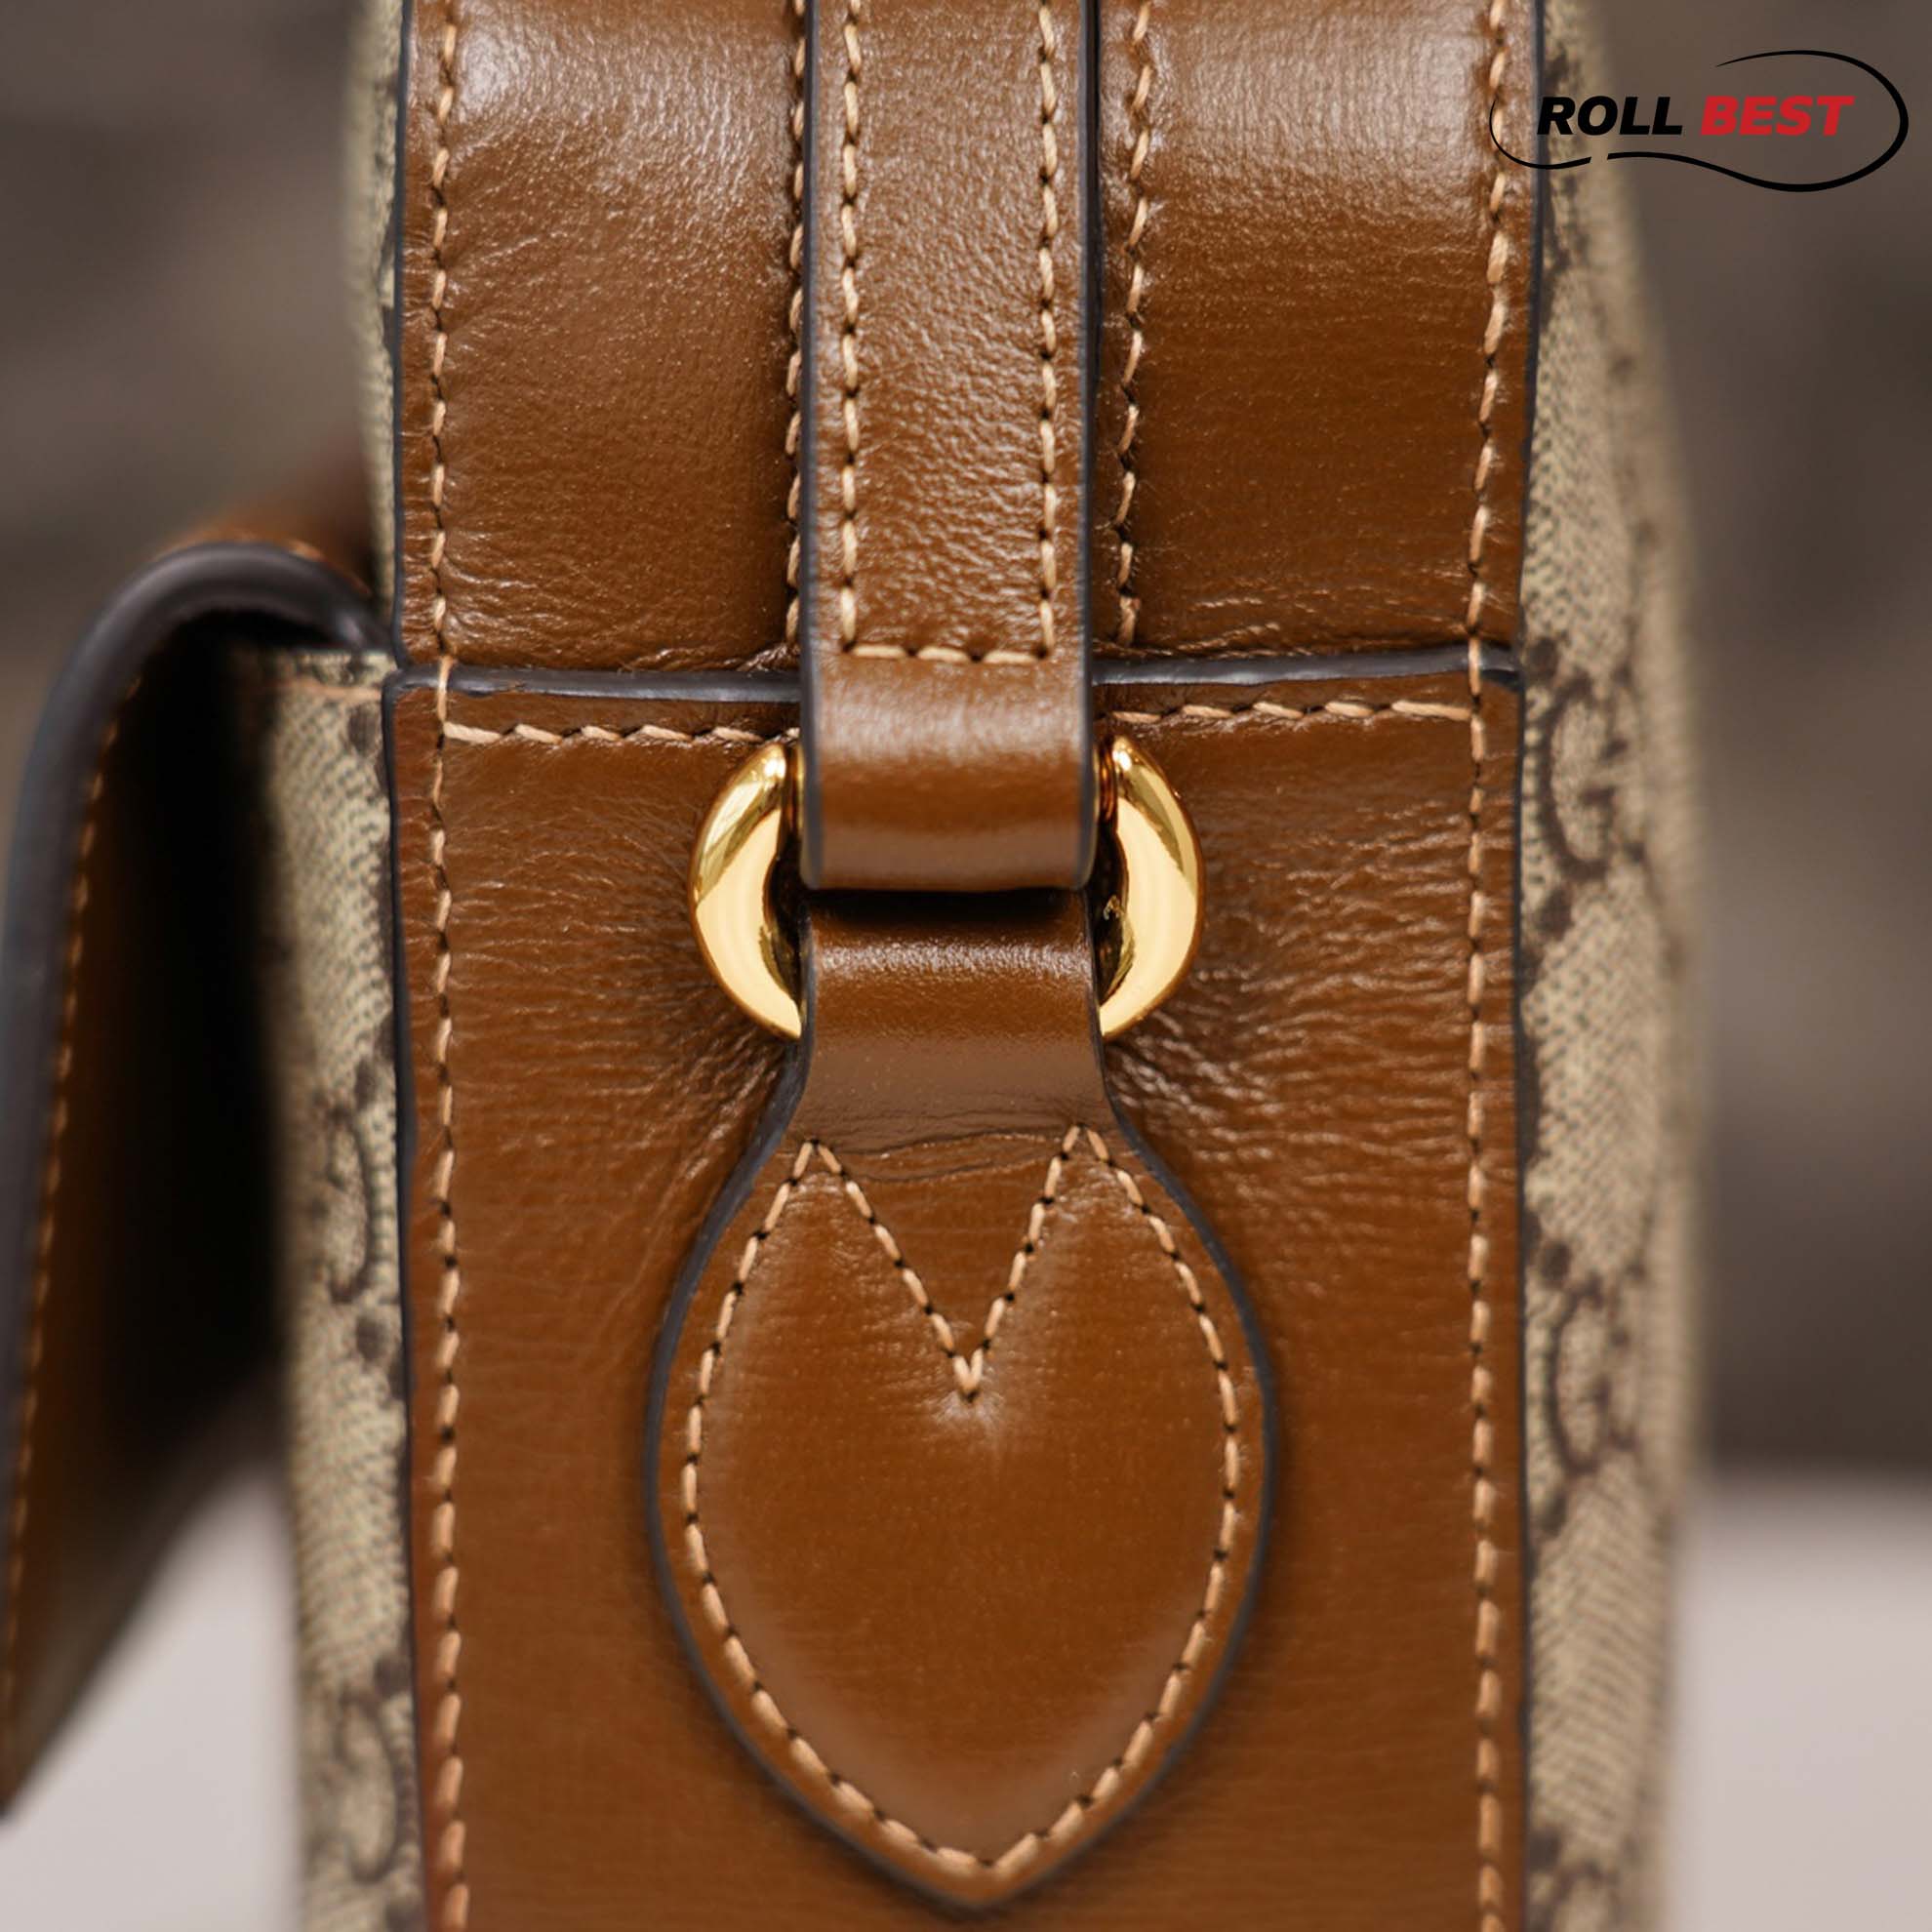 Túi Gucci Horsebit 1955 Small Shoulder Bag GG Canvas Brown Nâu